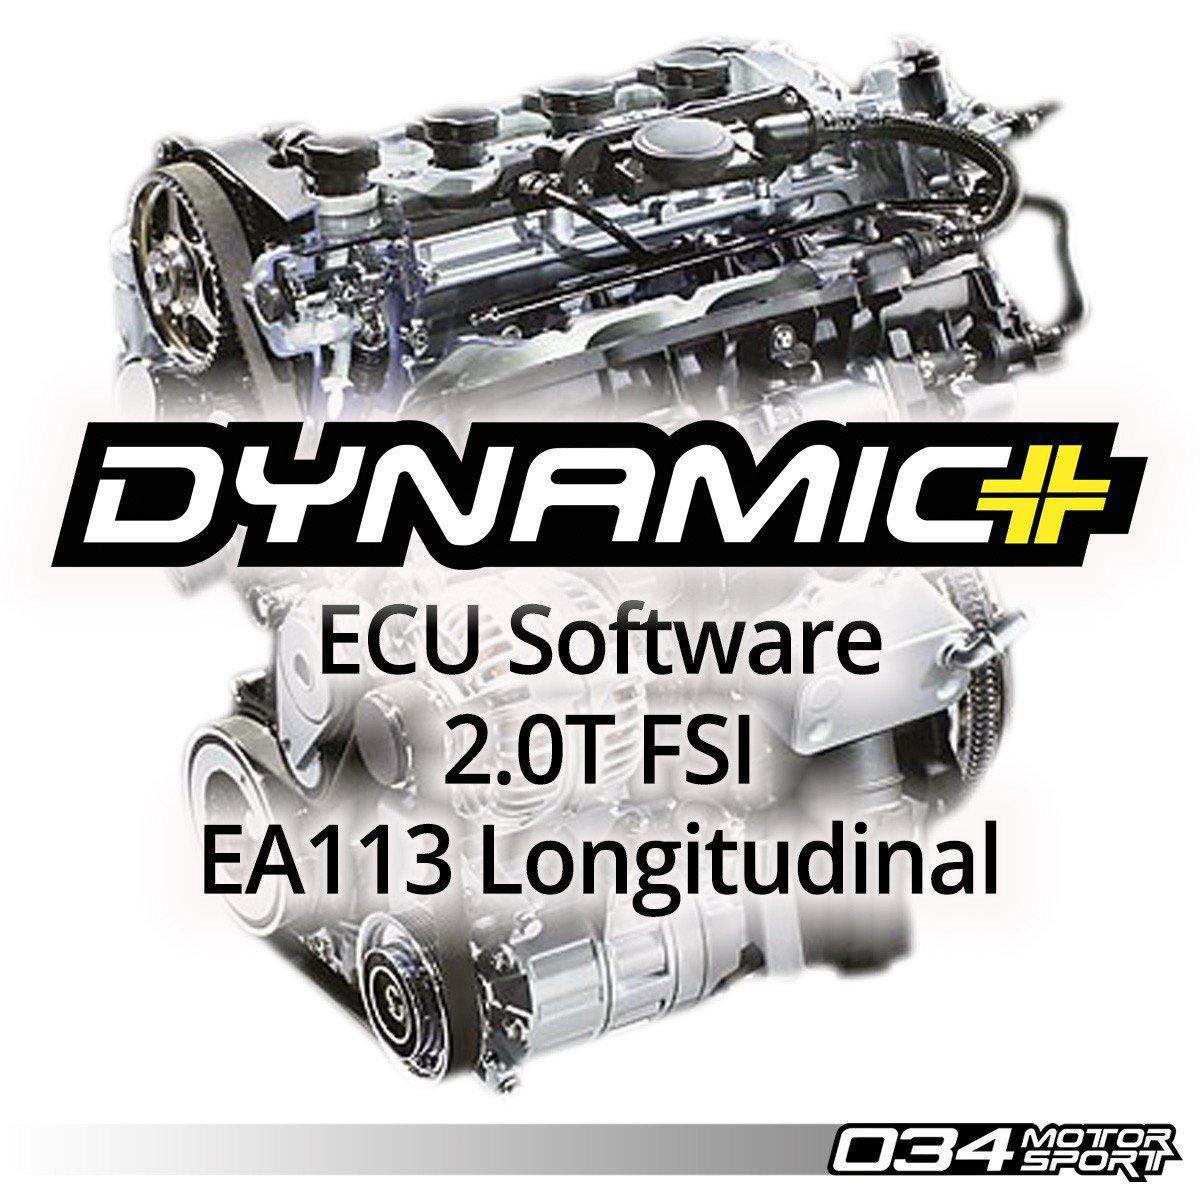 034Motorsport B7 Audi A4 2.0TFSI Performance Software-A Little Tuning Co